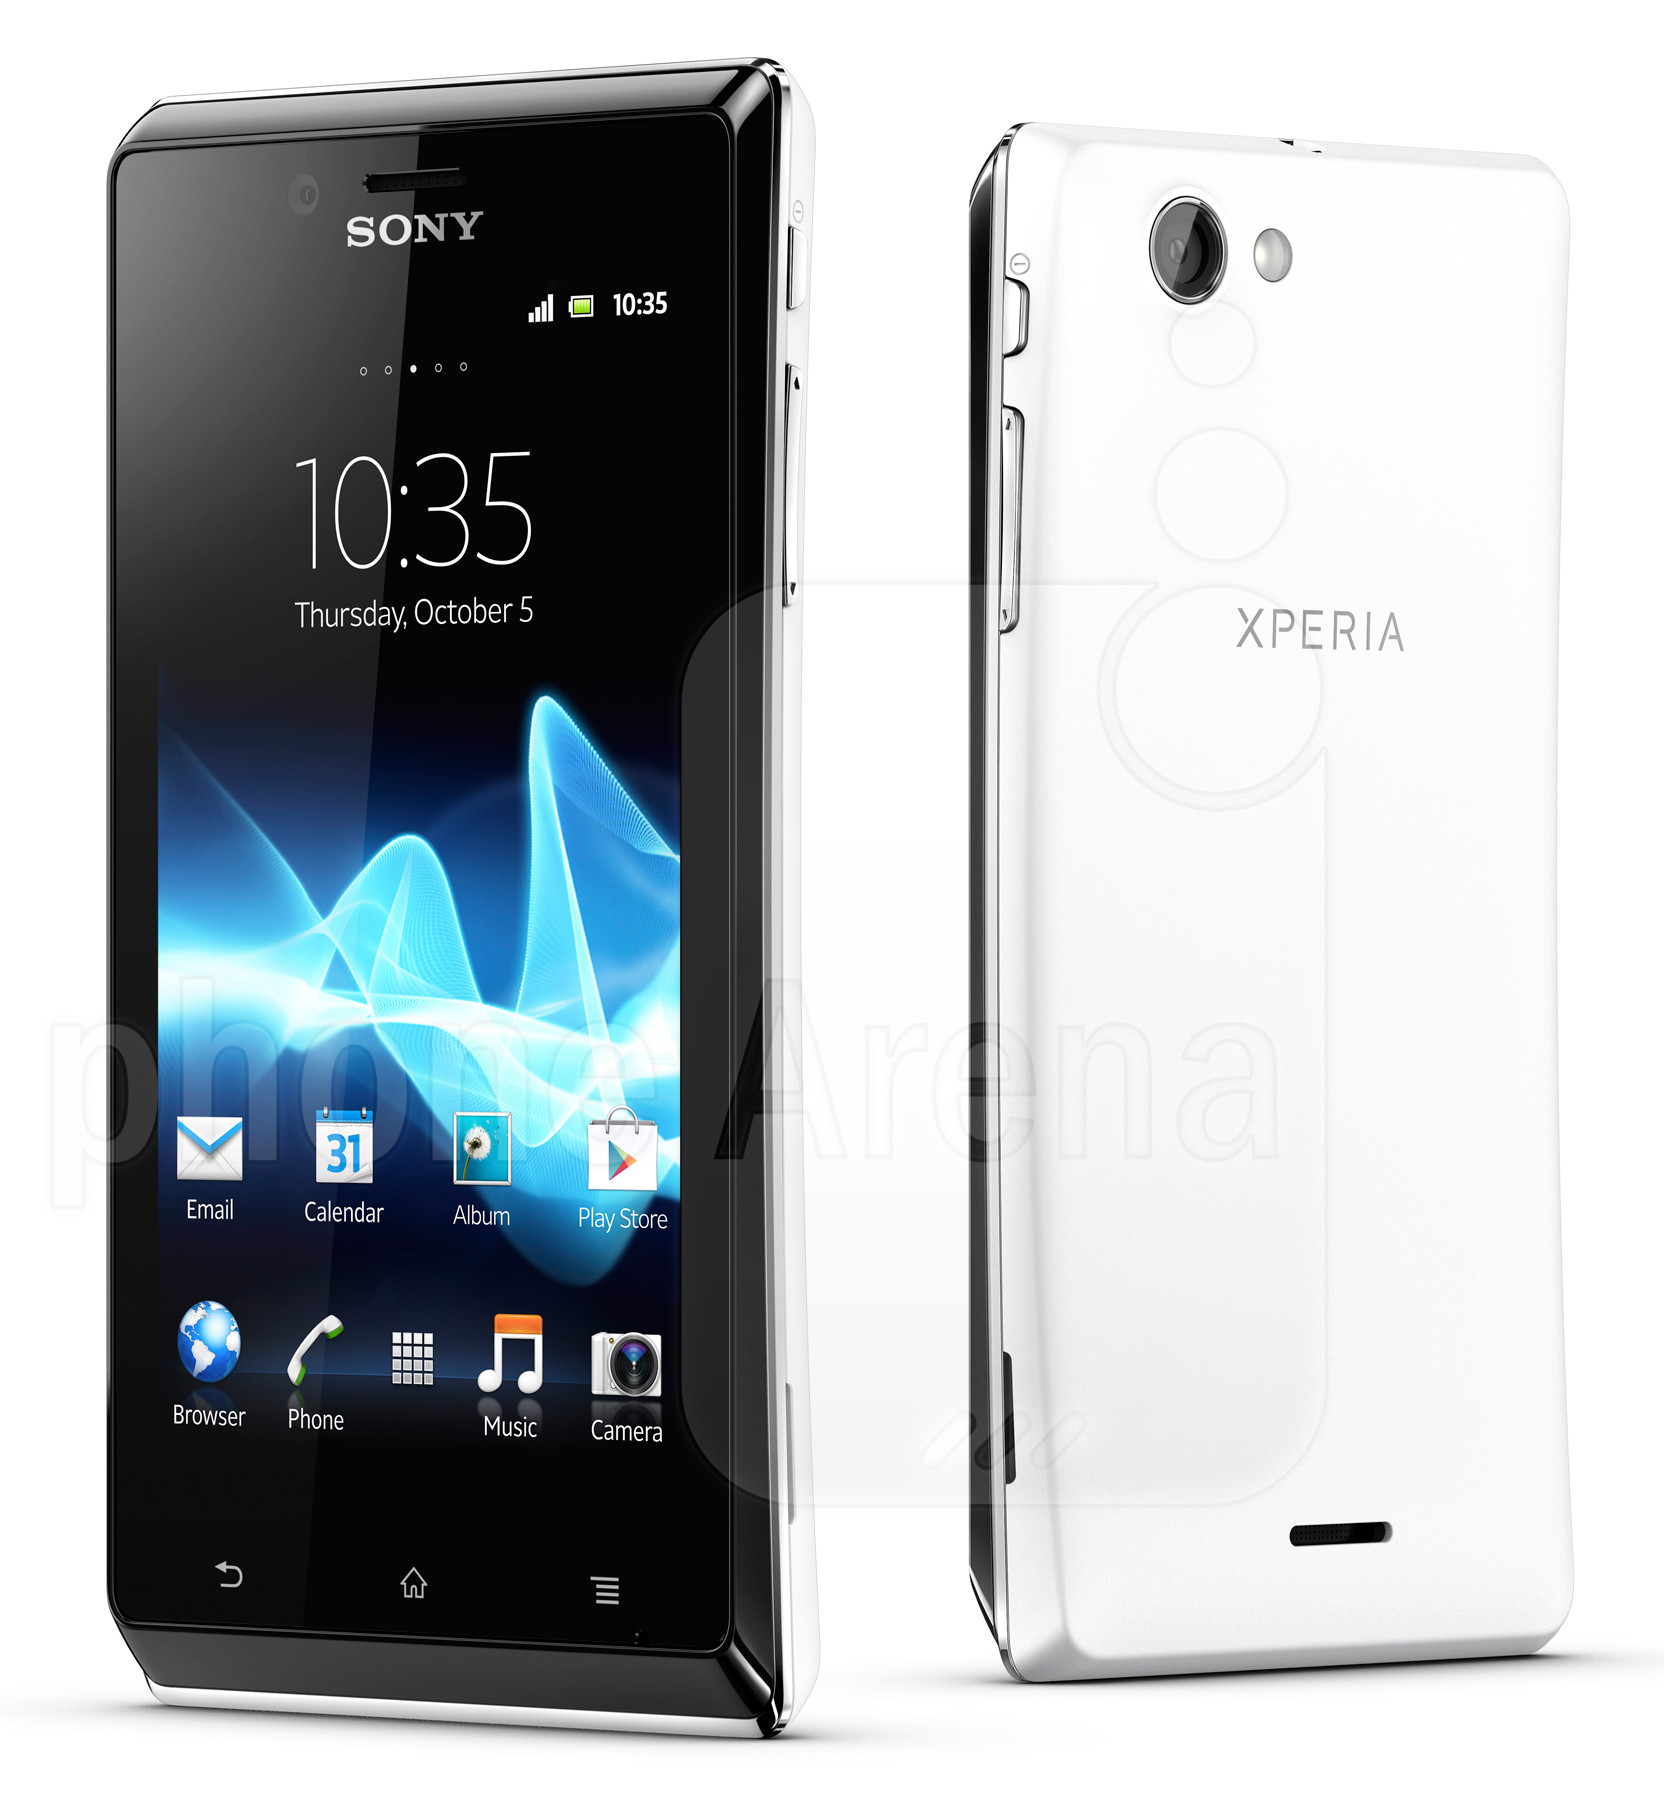 Sony Xperia J specs